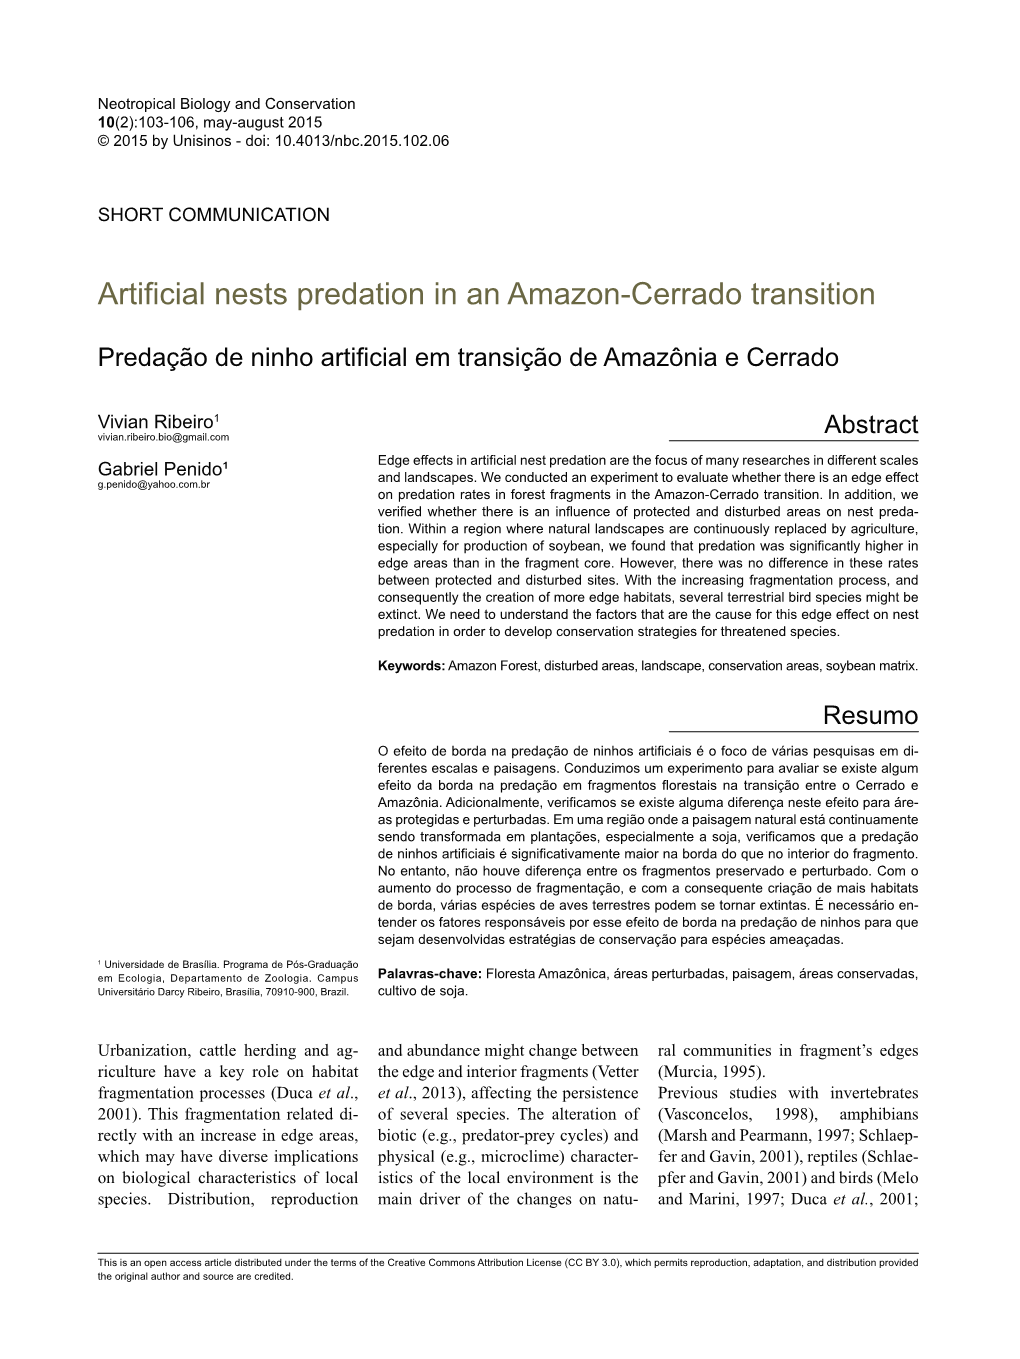 Artificial Nests Predation in an Amazon-Cerrado Transition